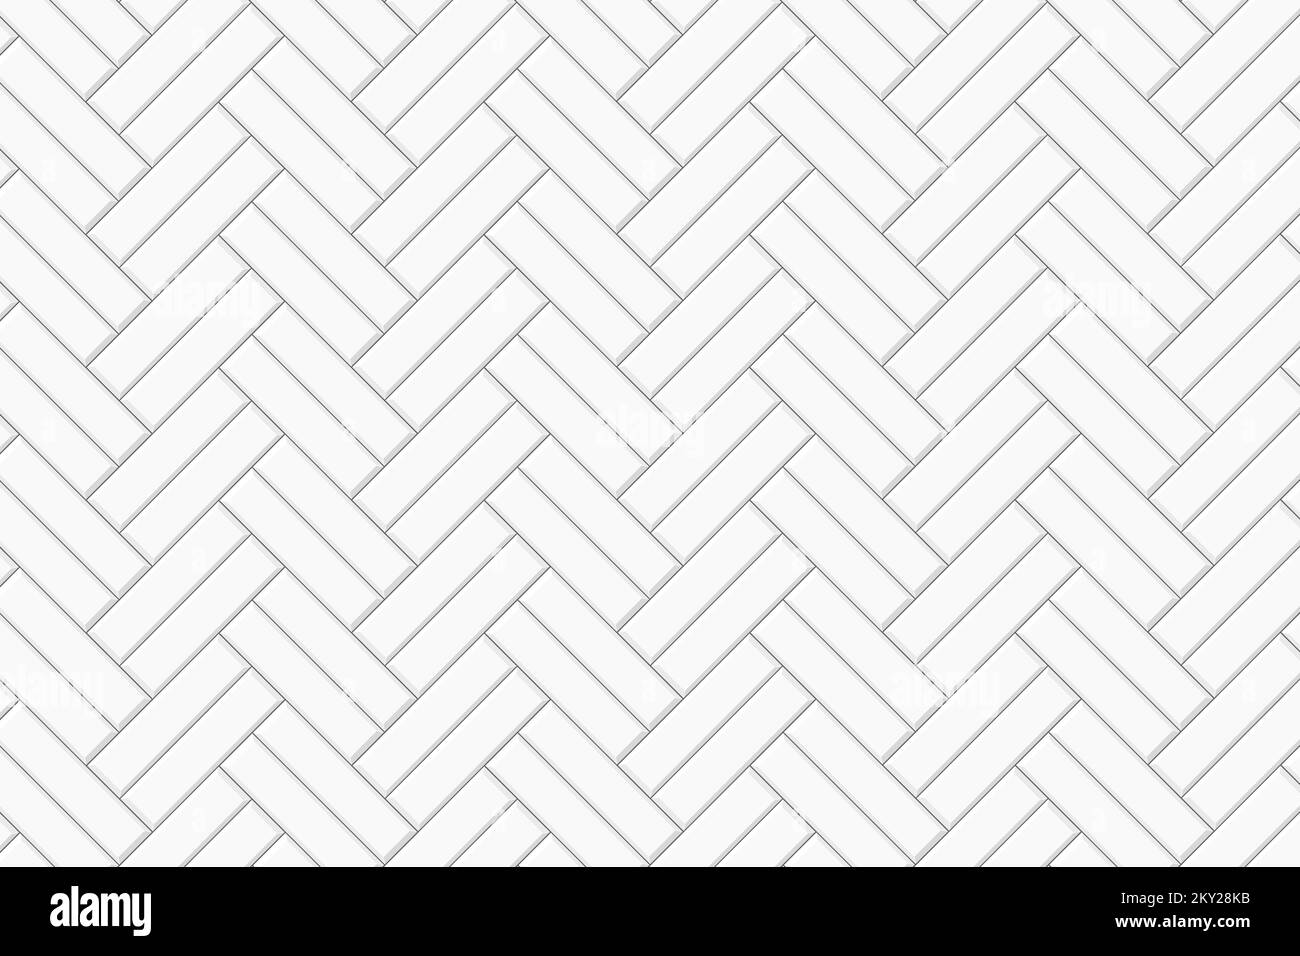 Herringbone tile Black and White Stock Photos & Images - Alamy